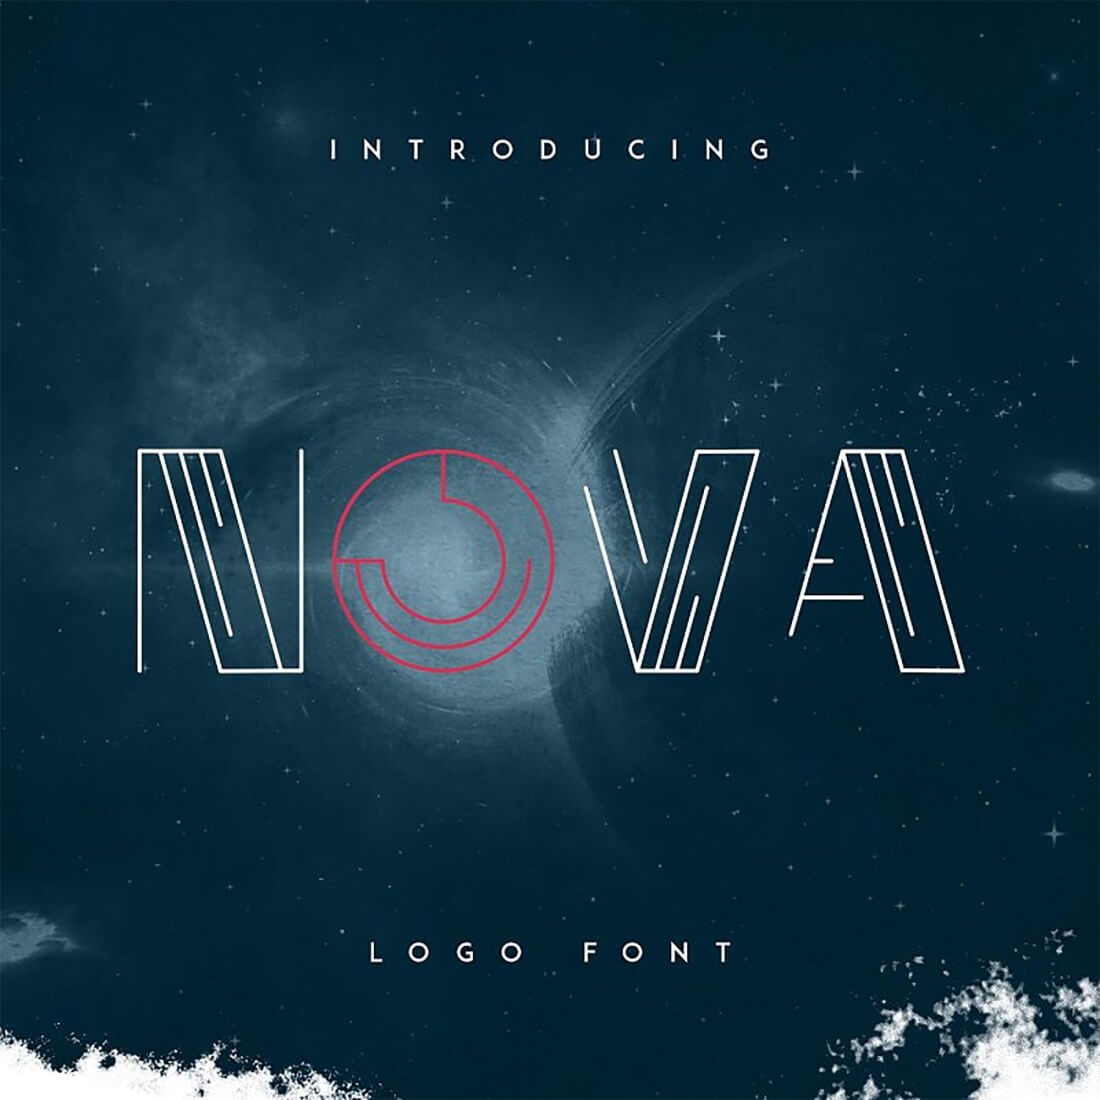 Nova – Champion Logo Font cover image.